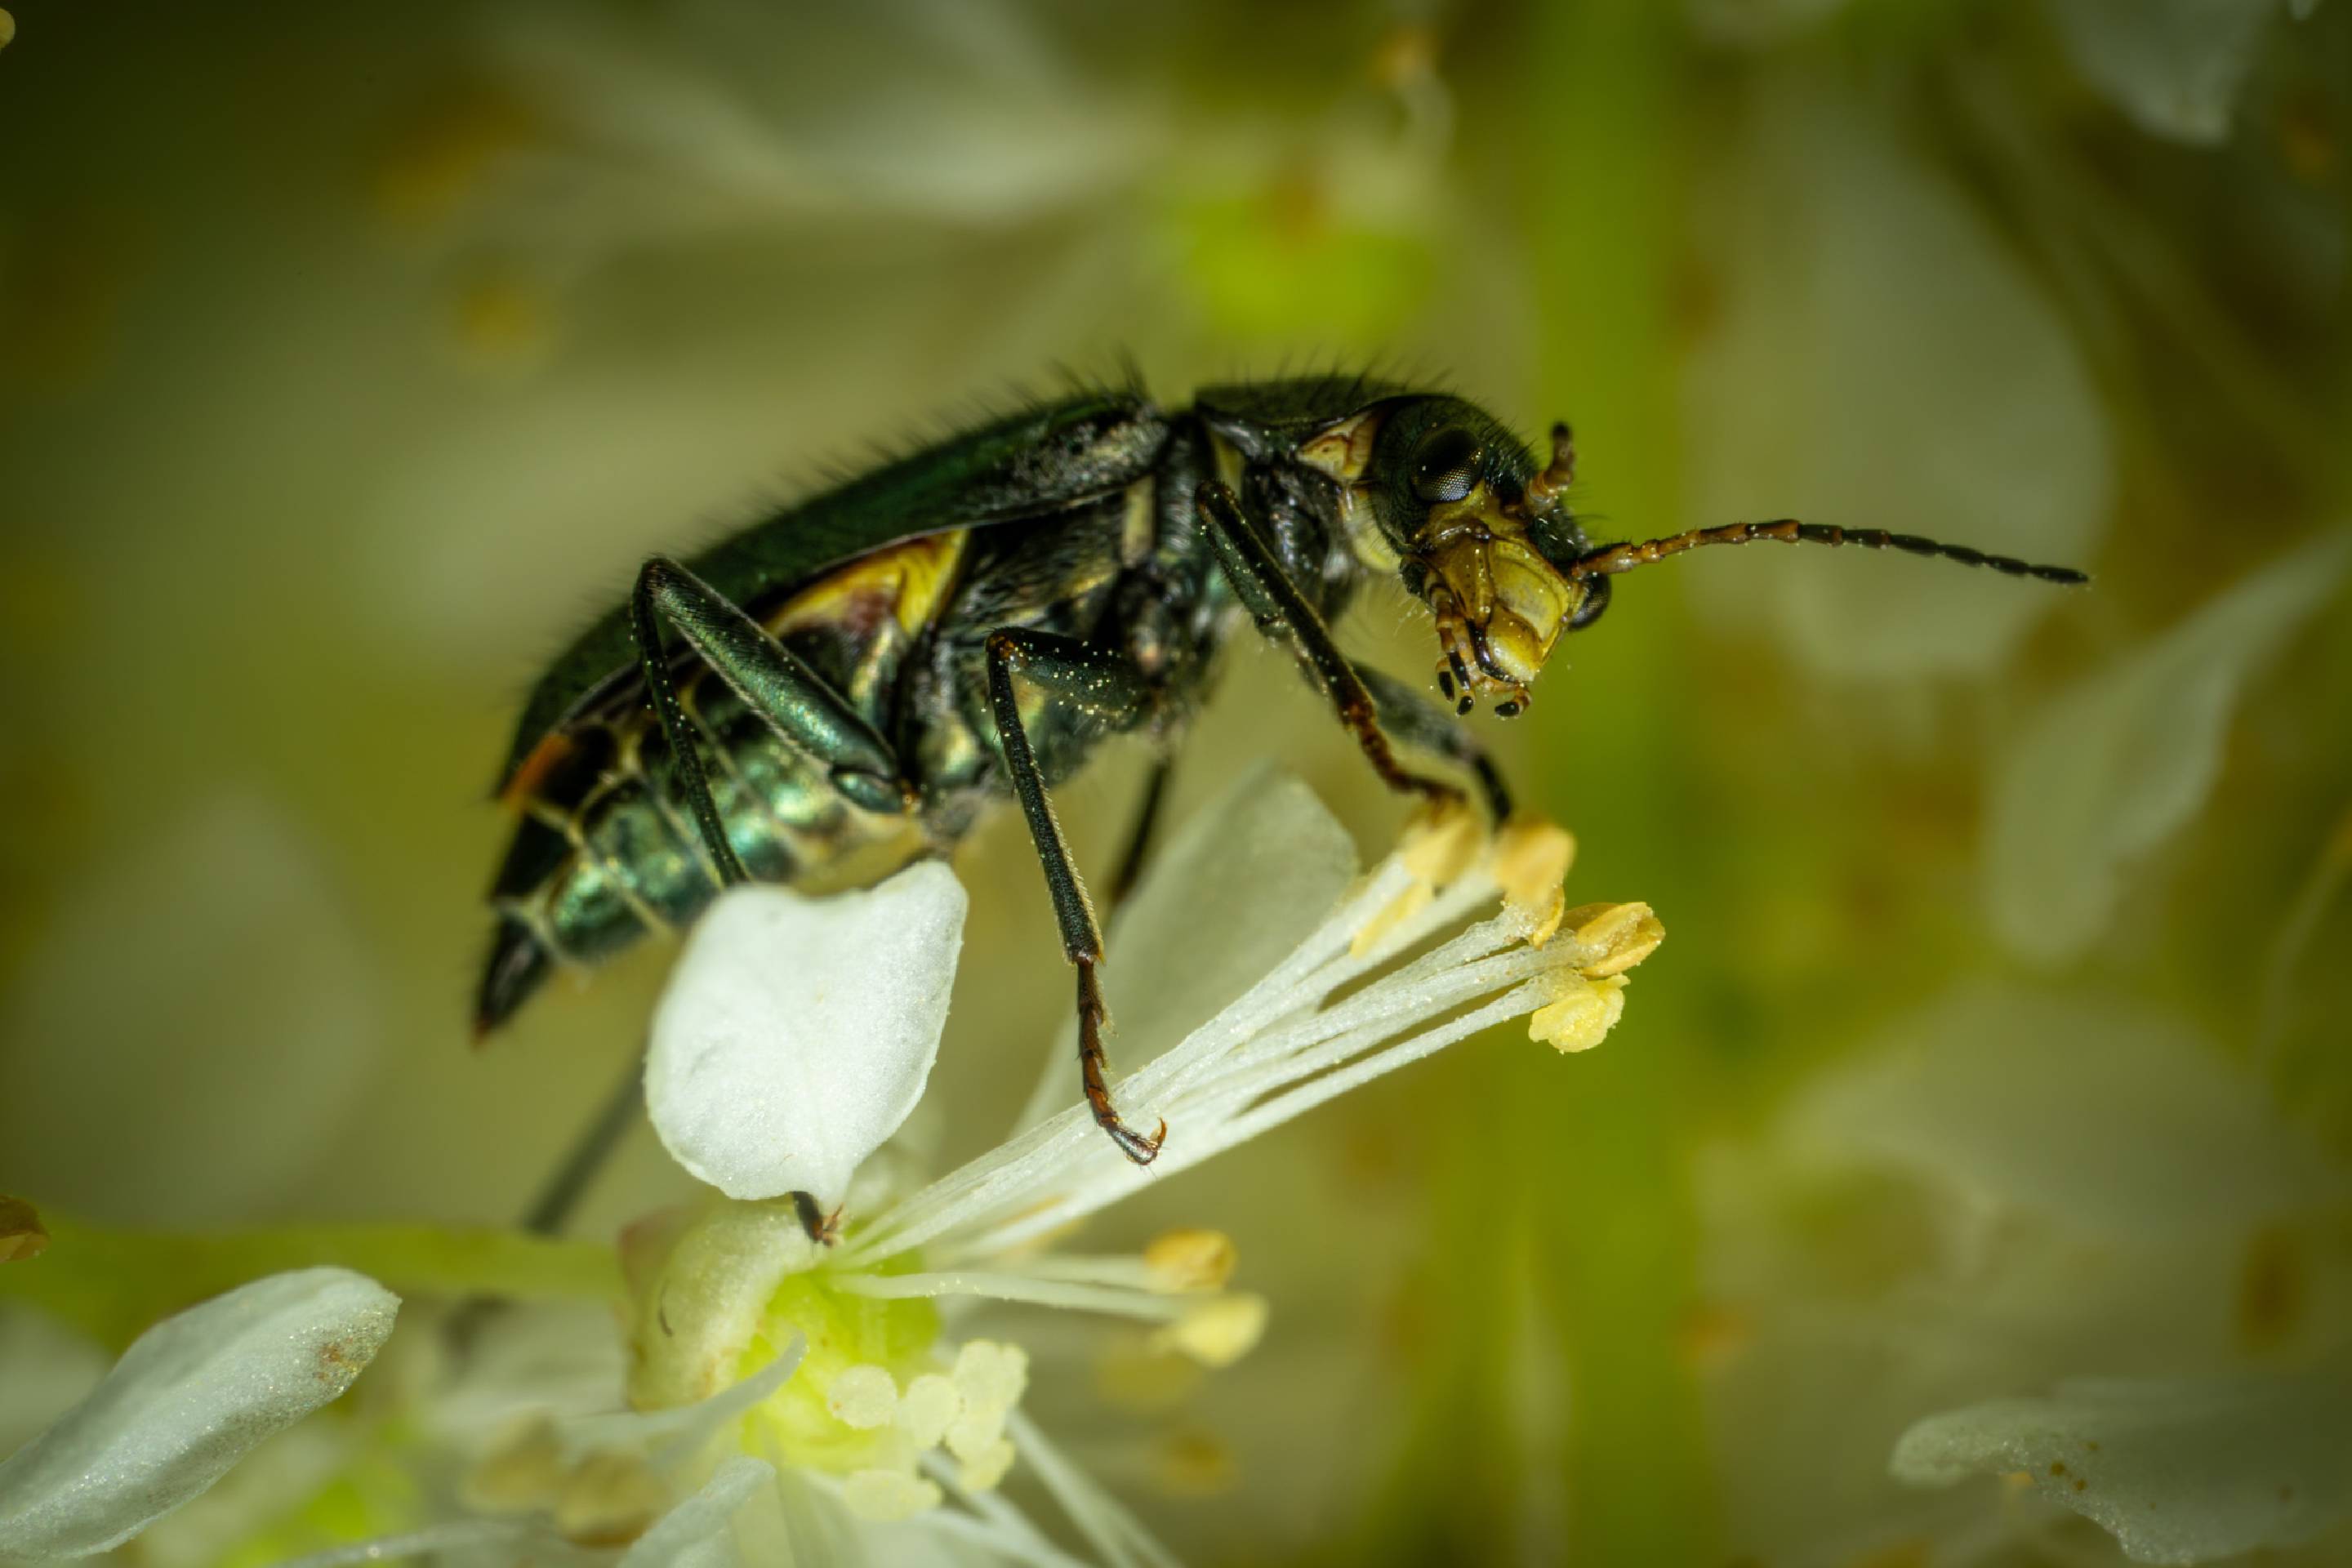 Malachite Beetles